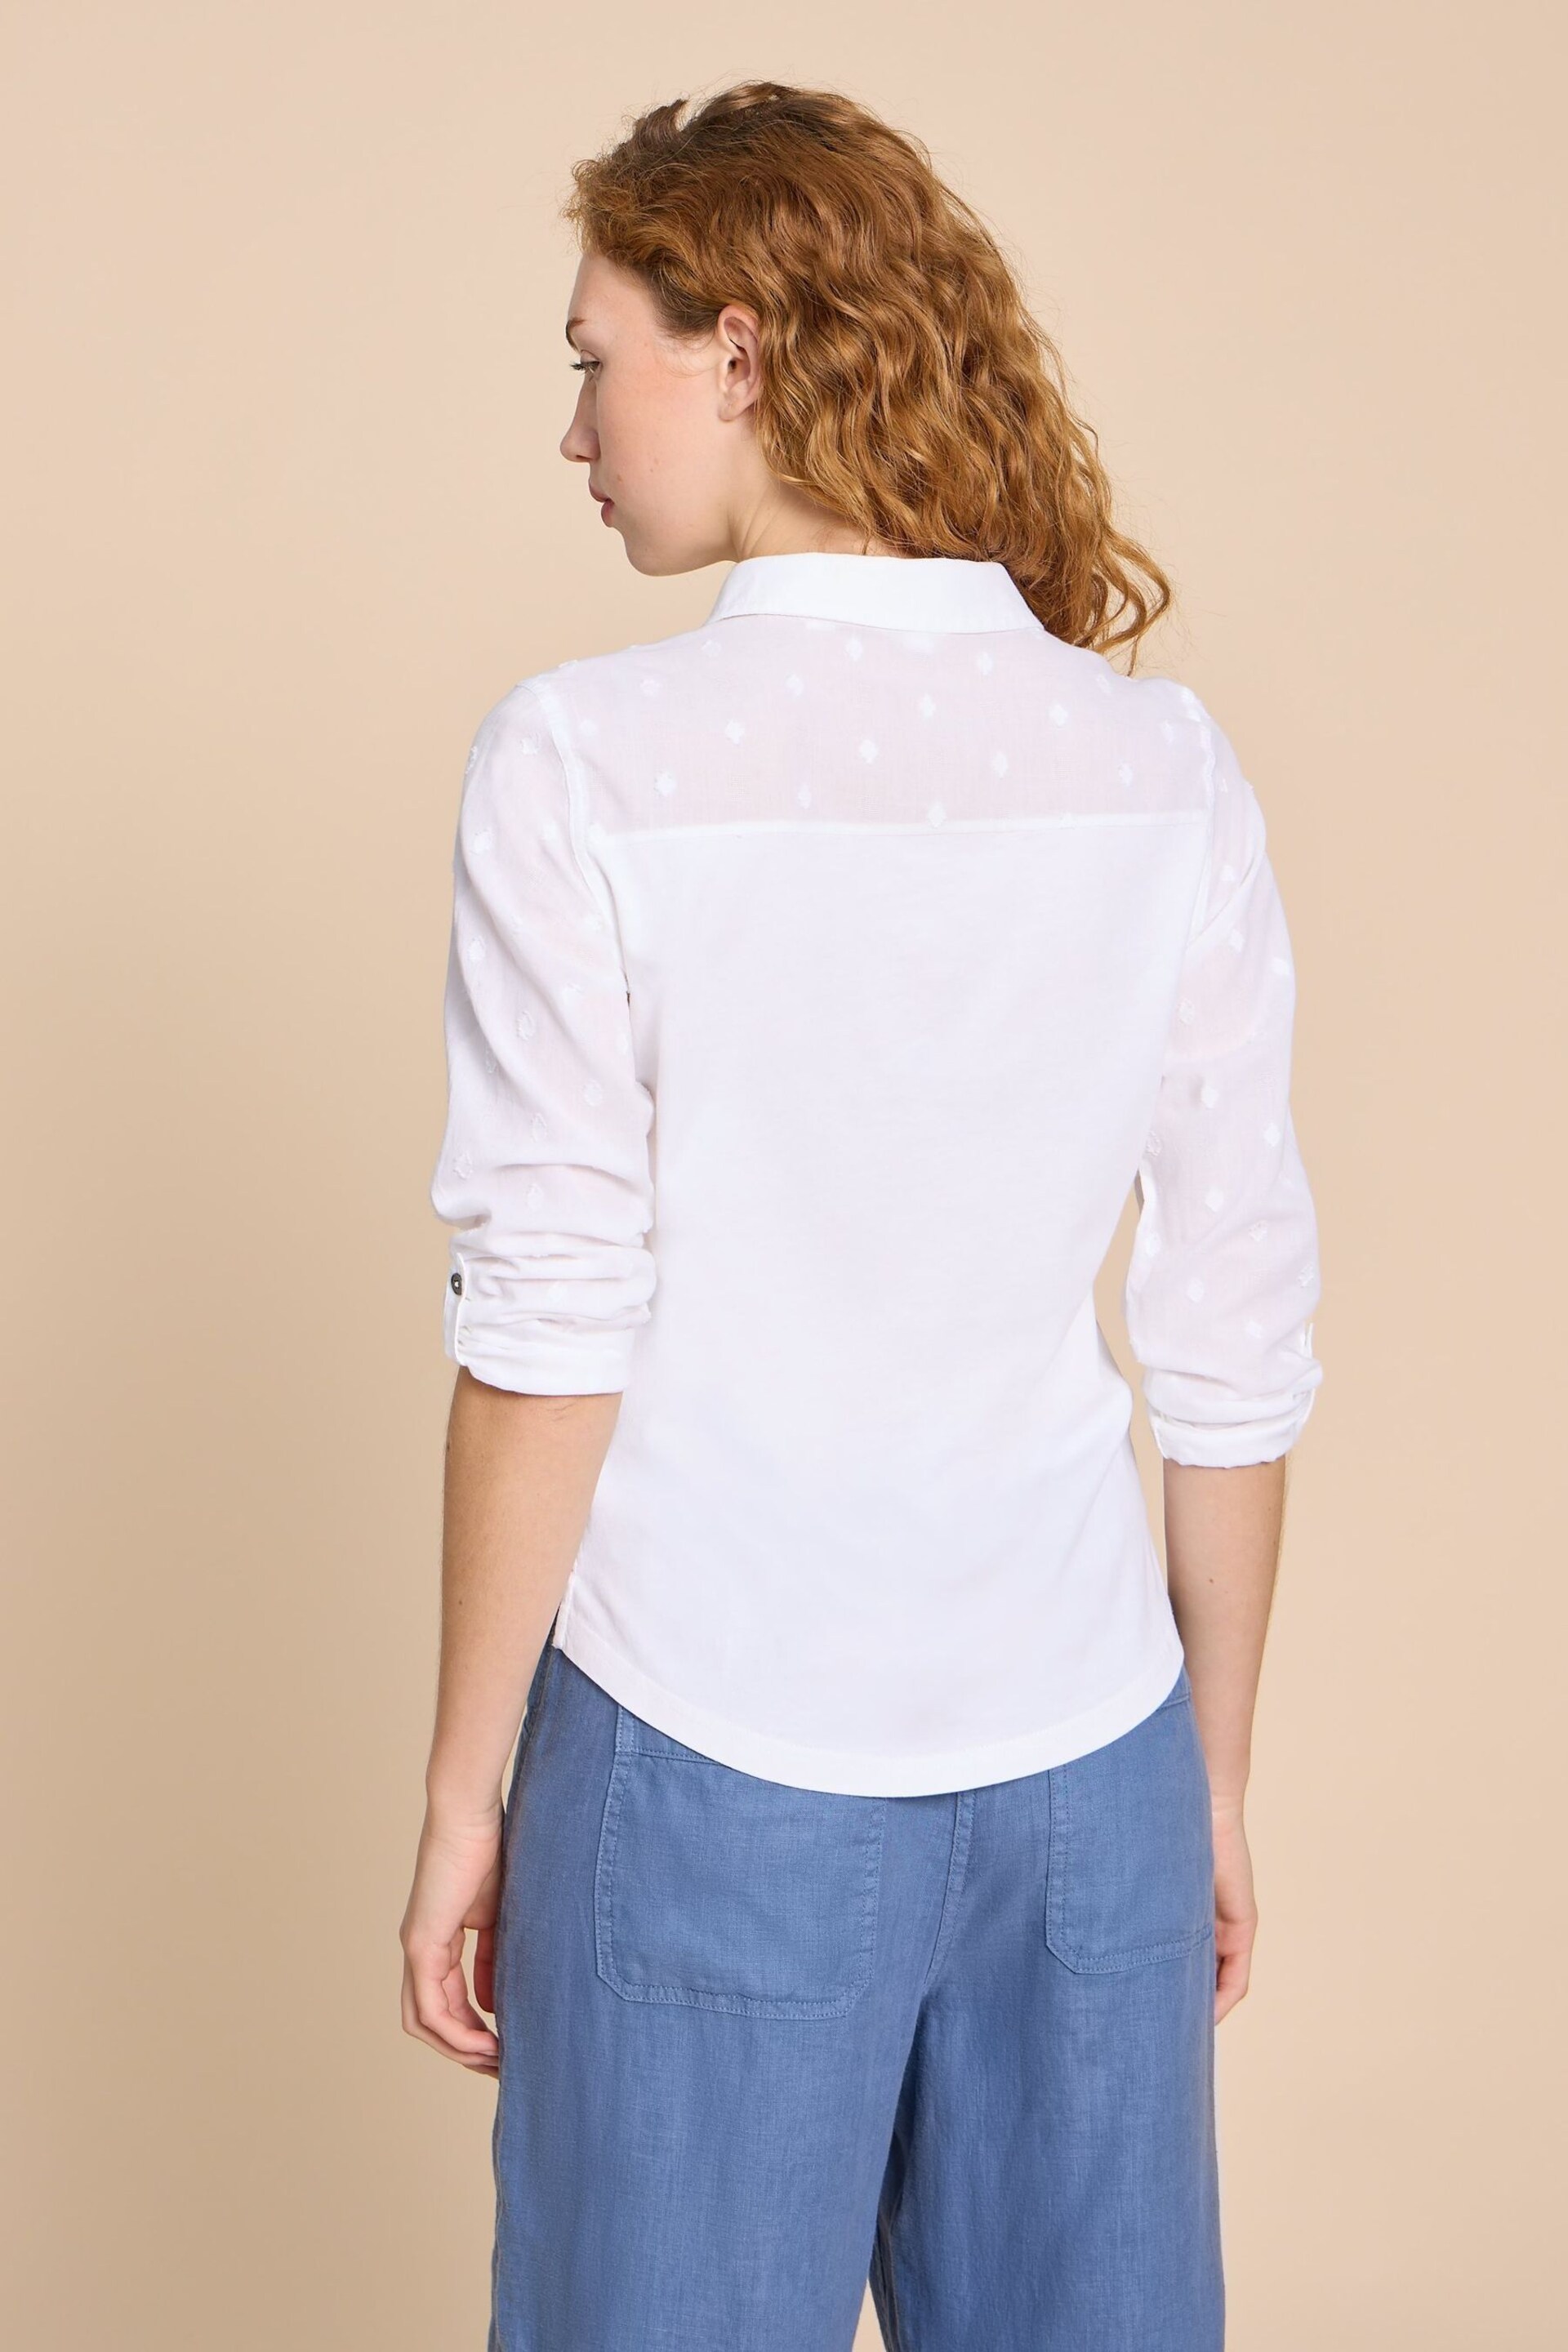 White Stuff White Mix Jersey Annie Shirt - Image 2 of 7